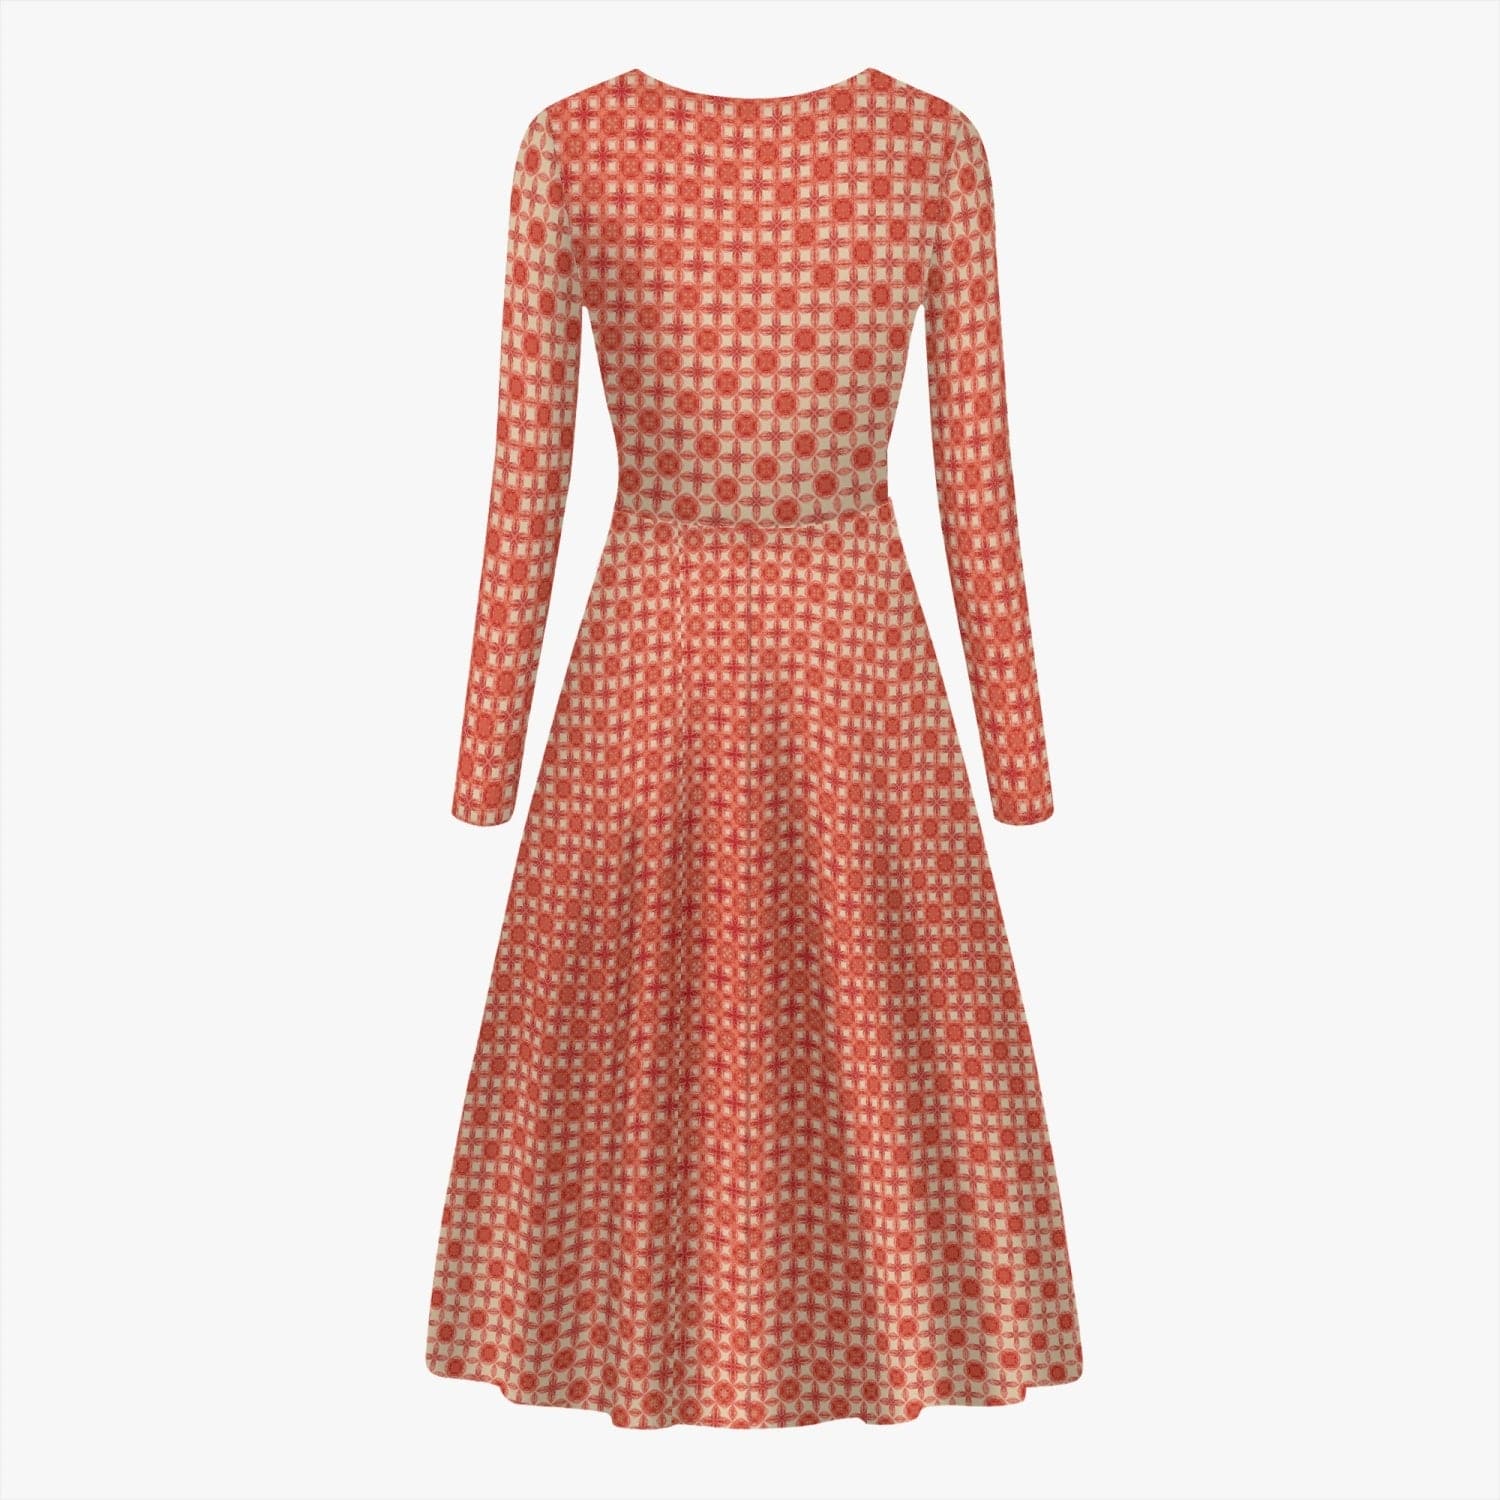 Soft Red Buttercup,  Women's Long-Sleeve Trendy  One-piece Dress, by Sensus Studio Design